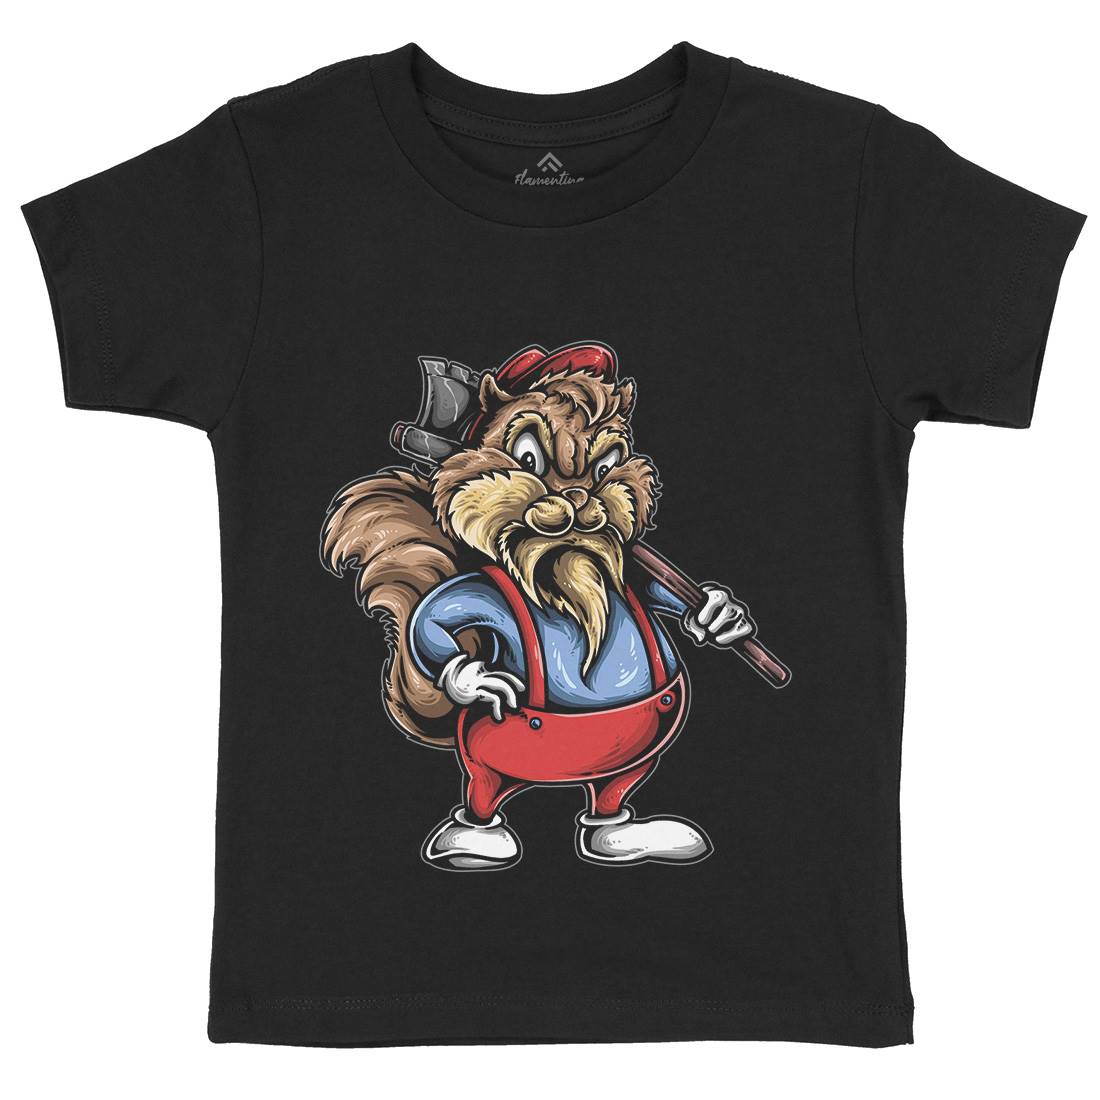 Chip Wood Kids Crew Neck T-Shirt Animals A409